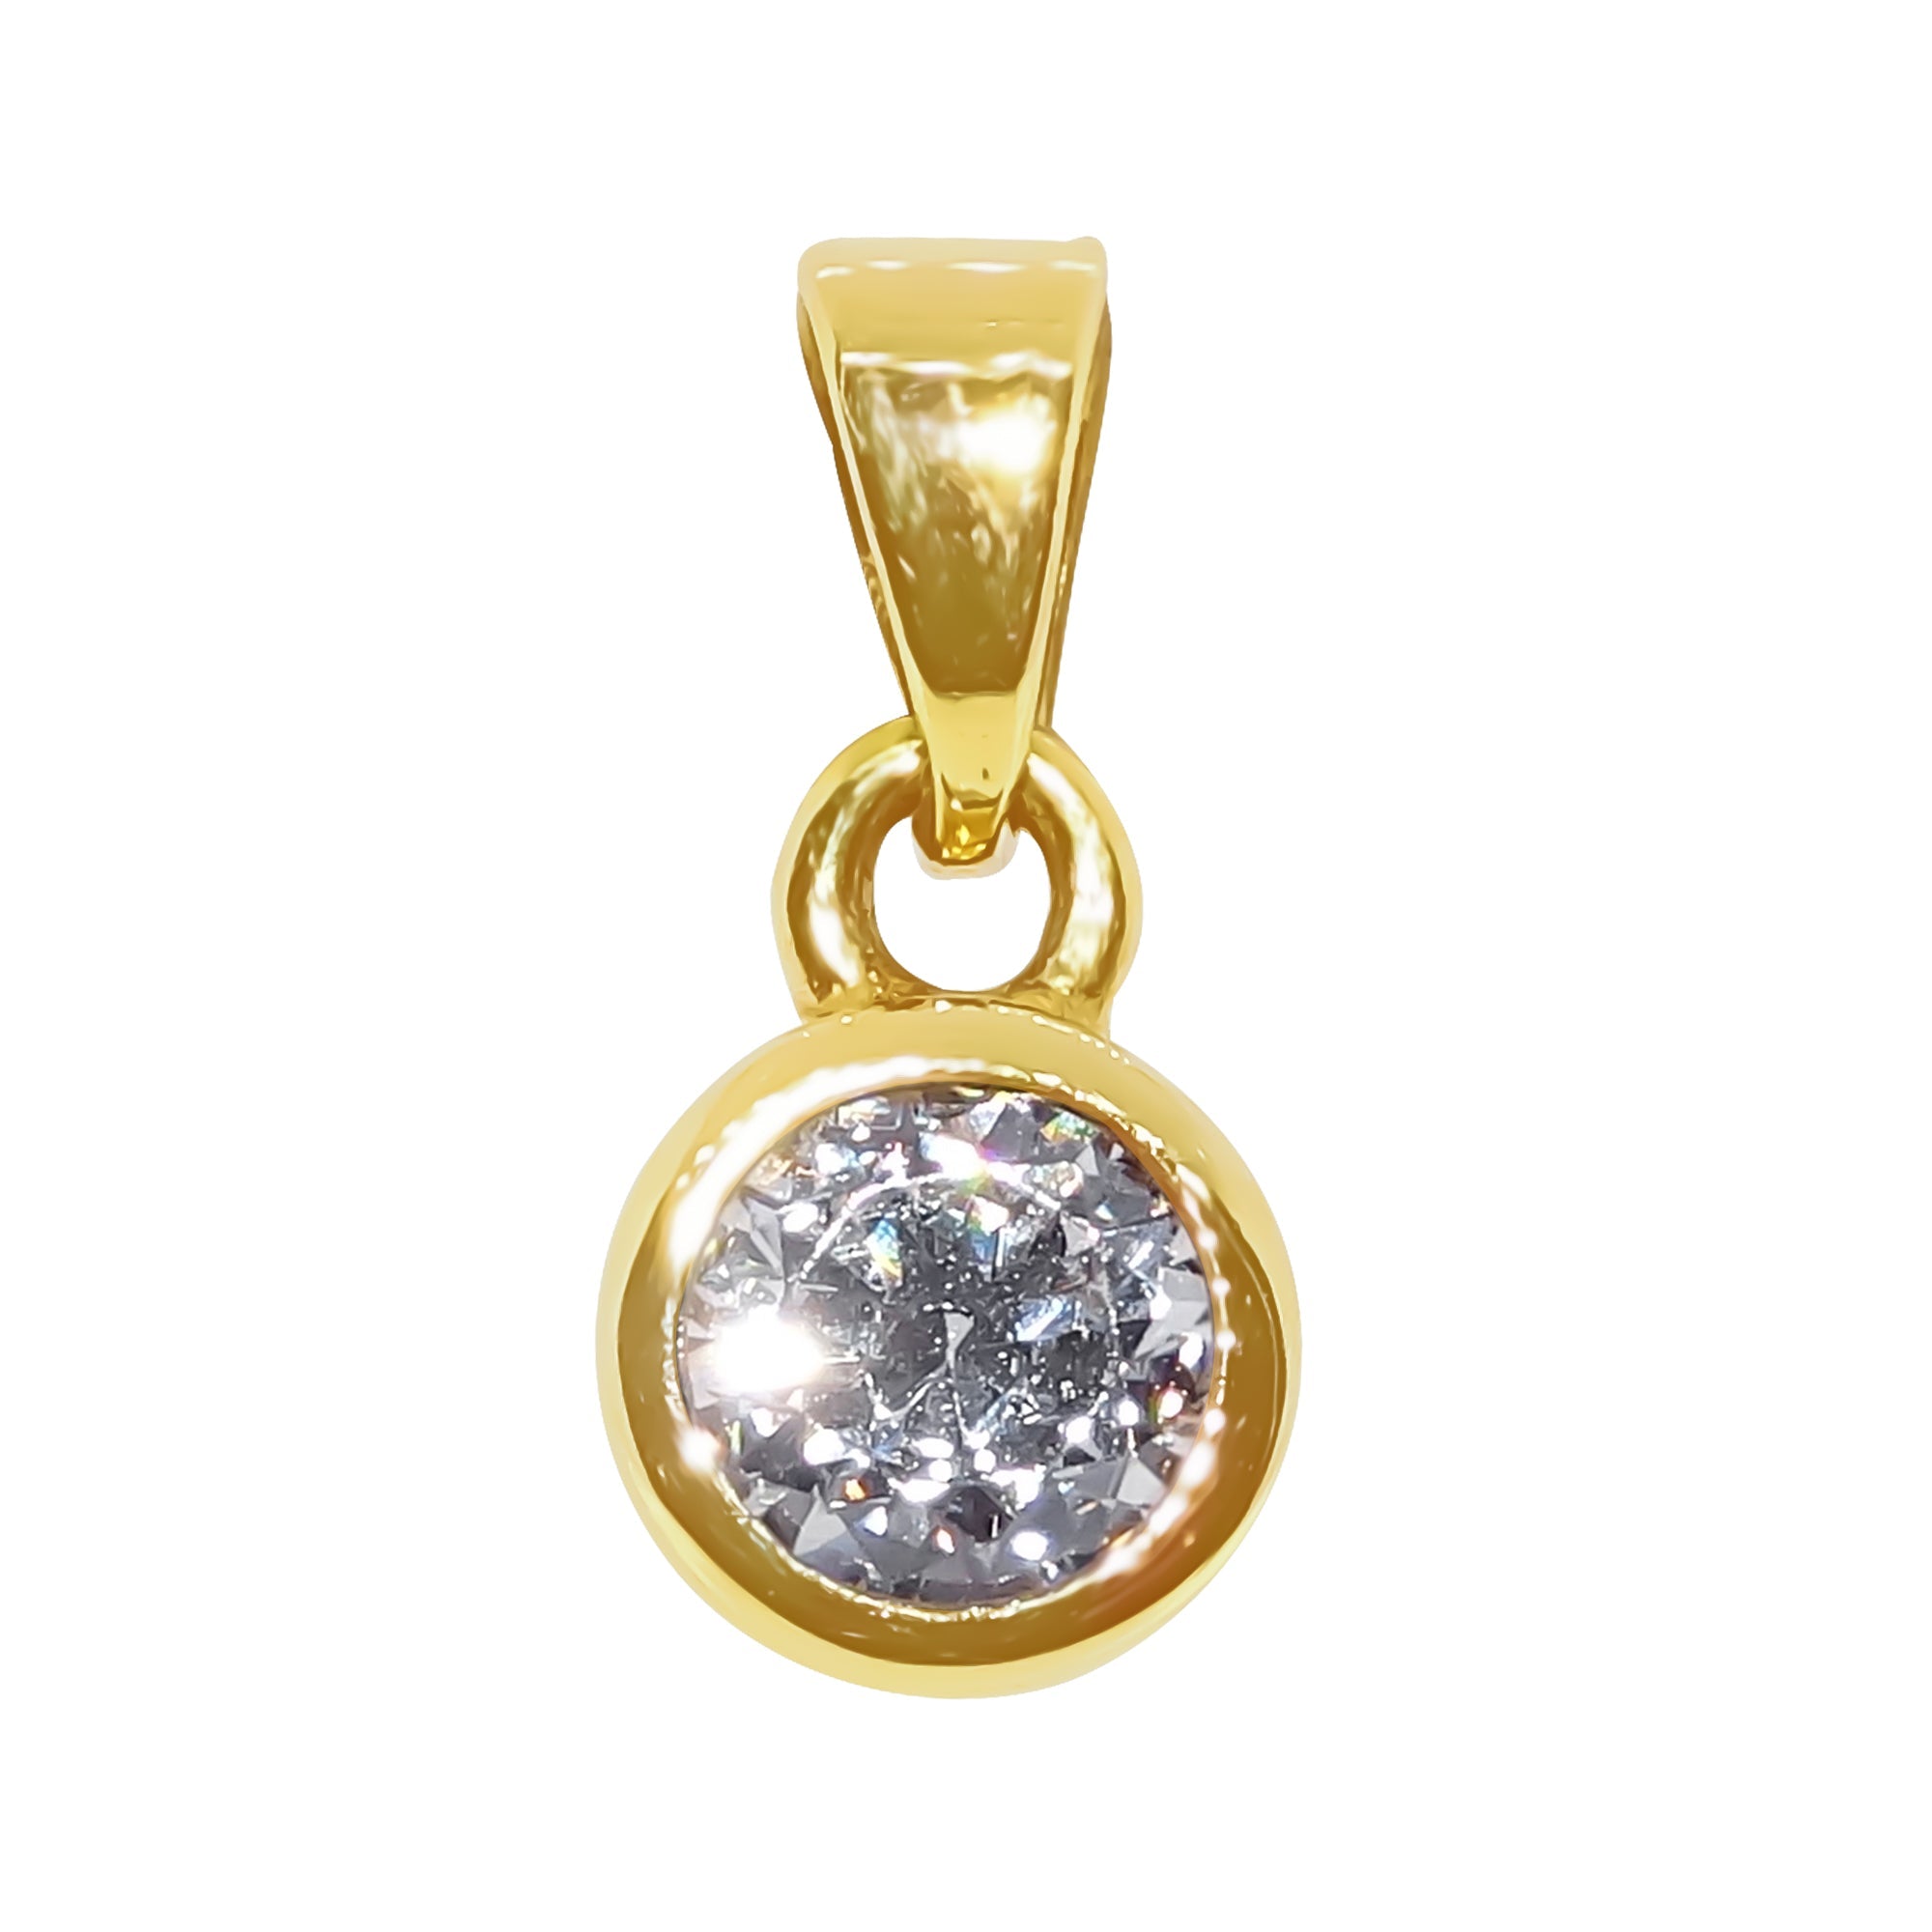 9ct gold cz pendant